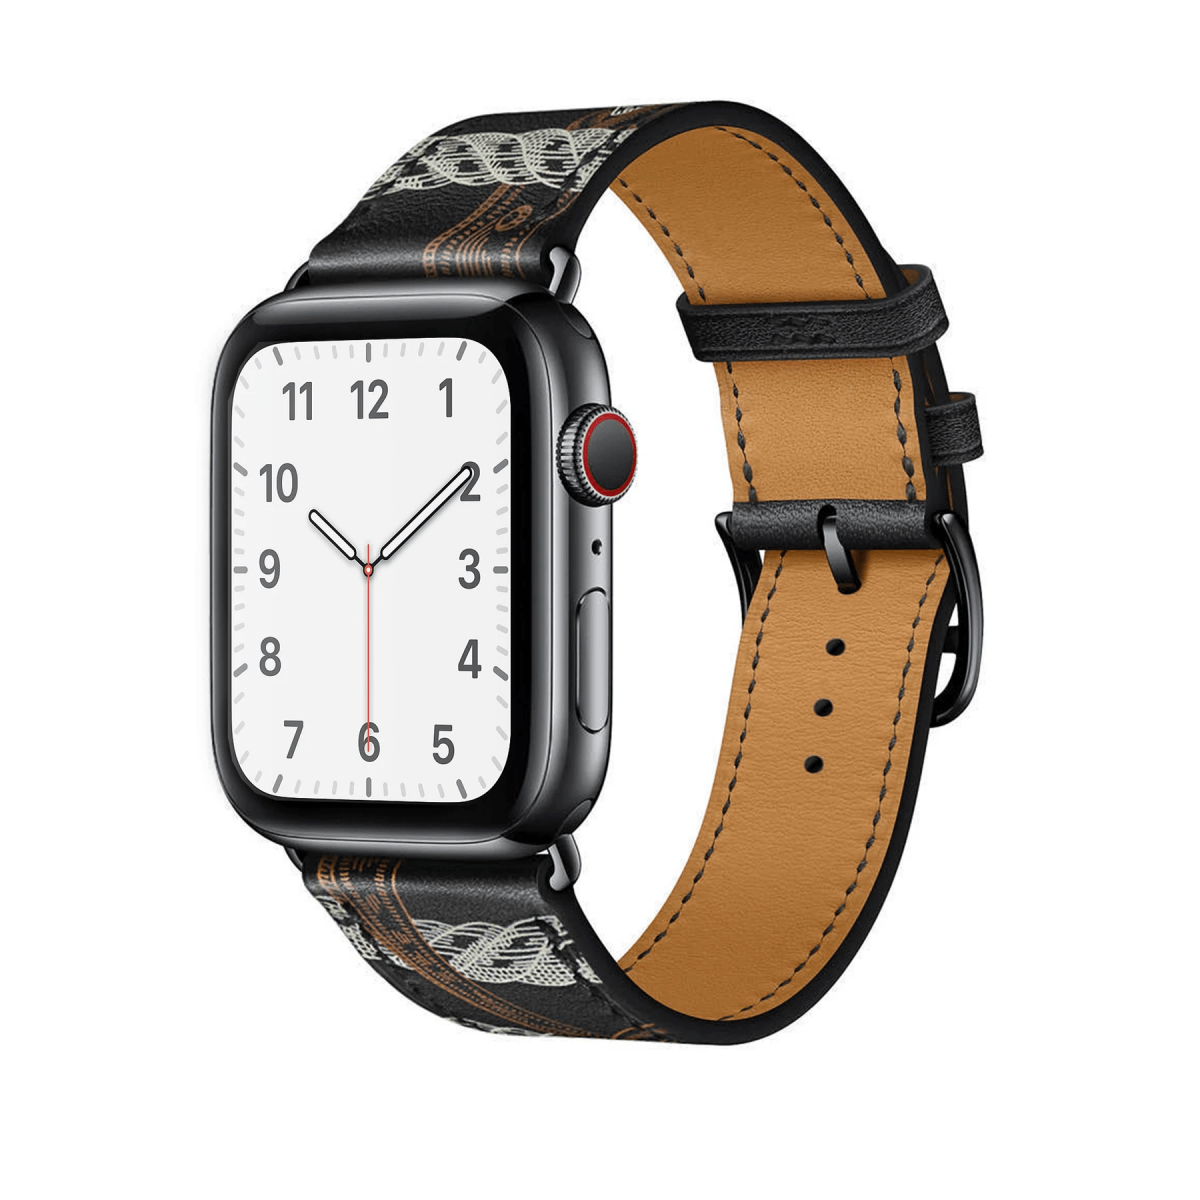 Řemínek iMore Single Tour Apple Watch Series 3/2/1 (42mm) - Noir